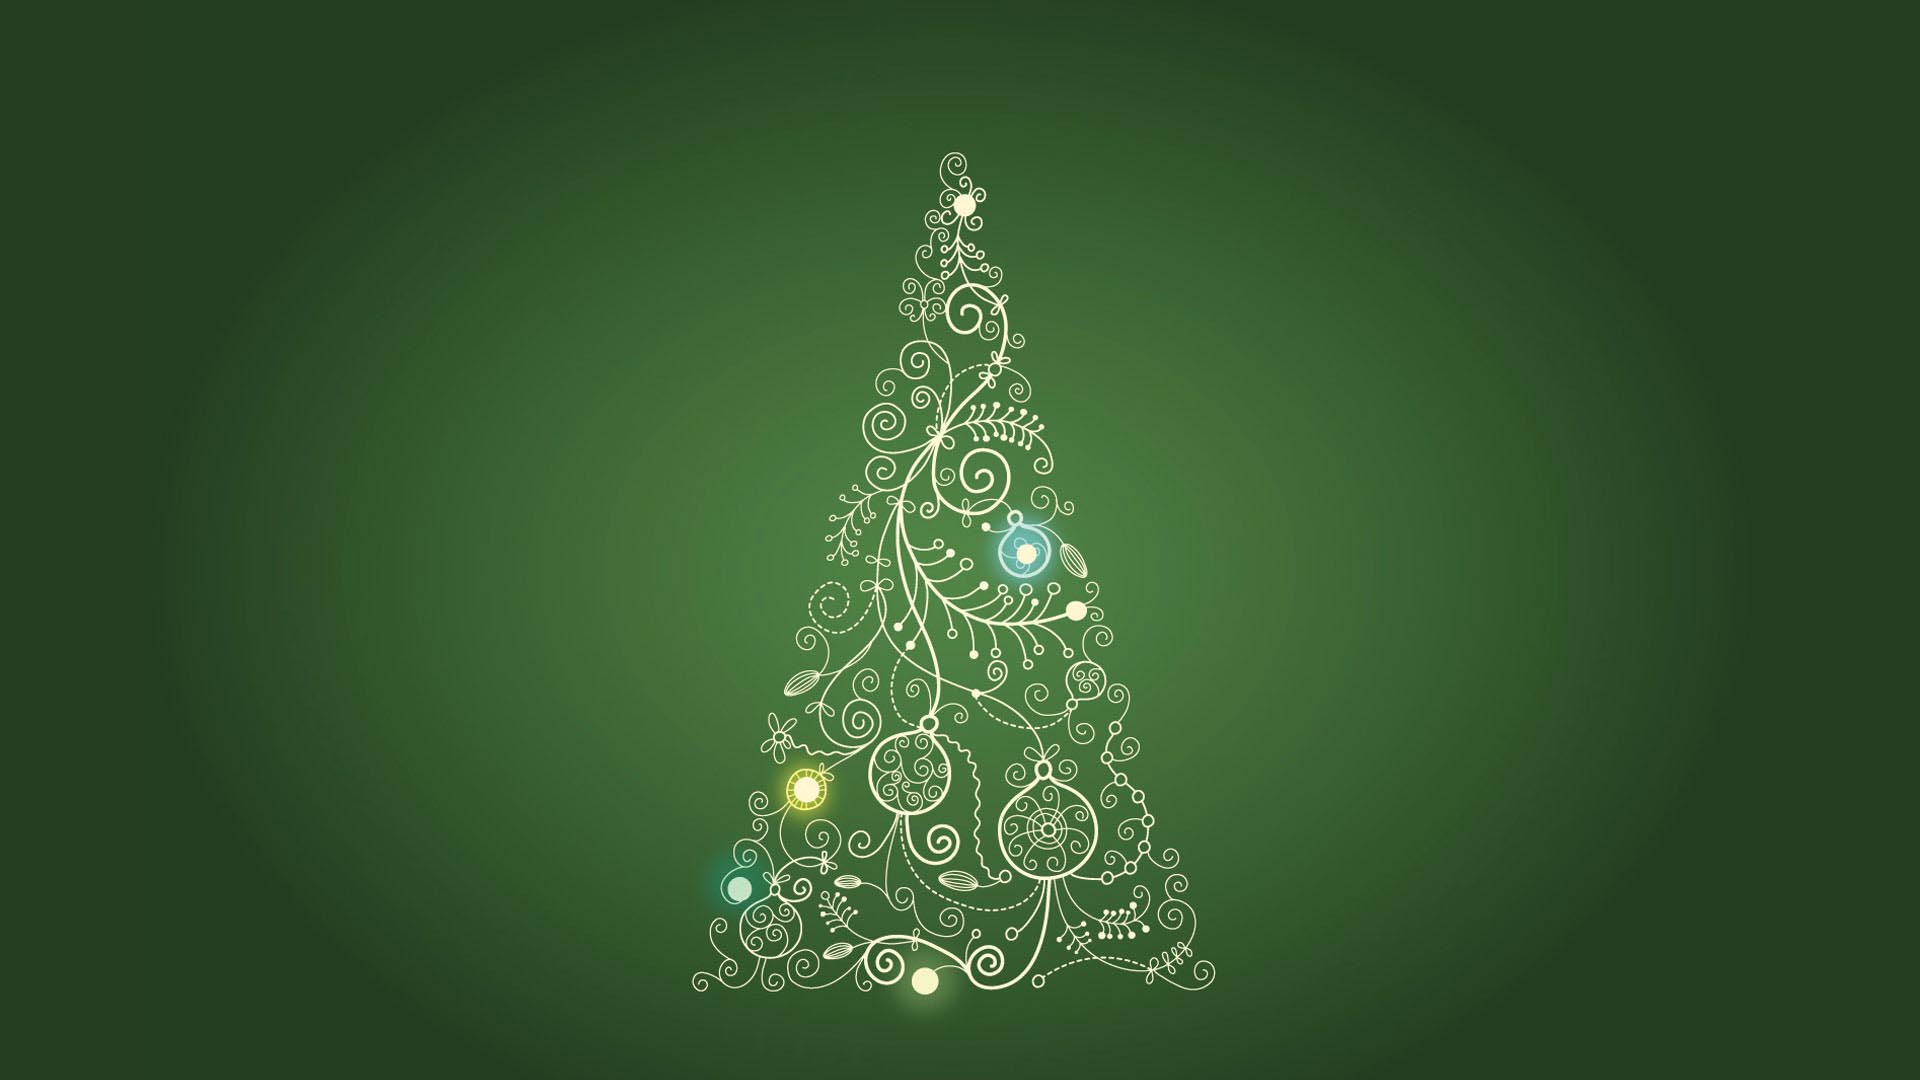 528911 Green Christmas Wallpaper Images Stock Photos  Vectors   Shutterstock